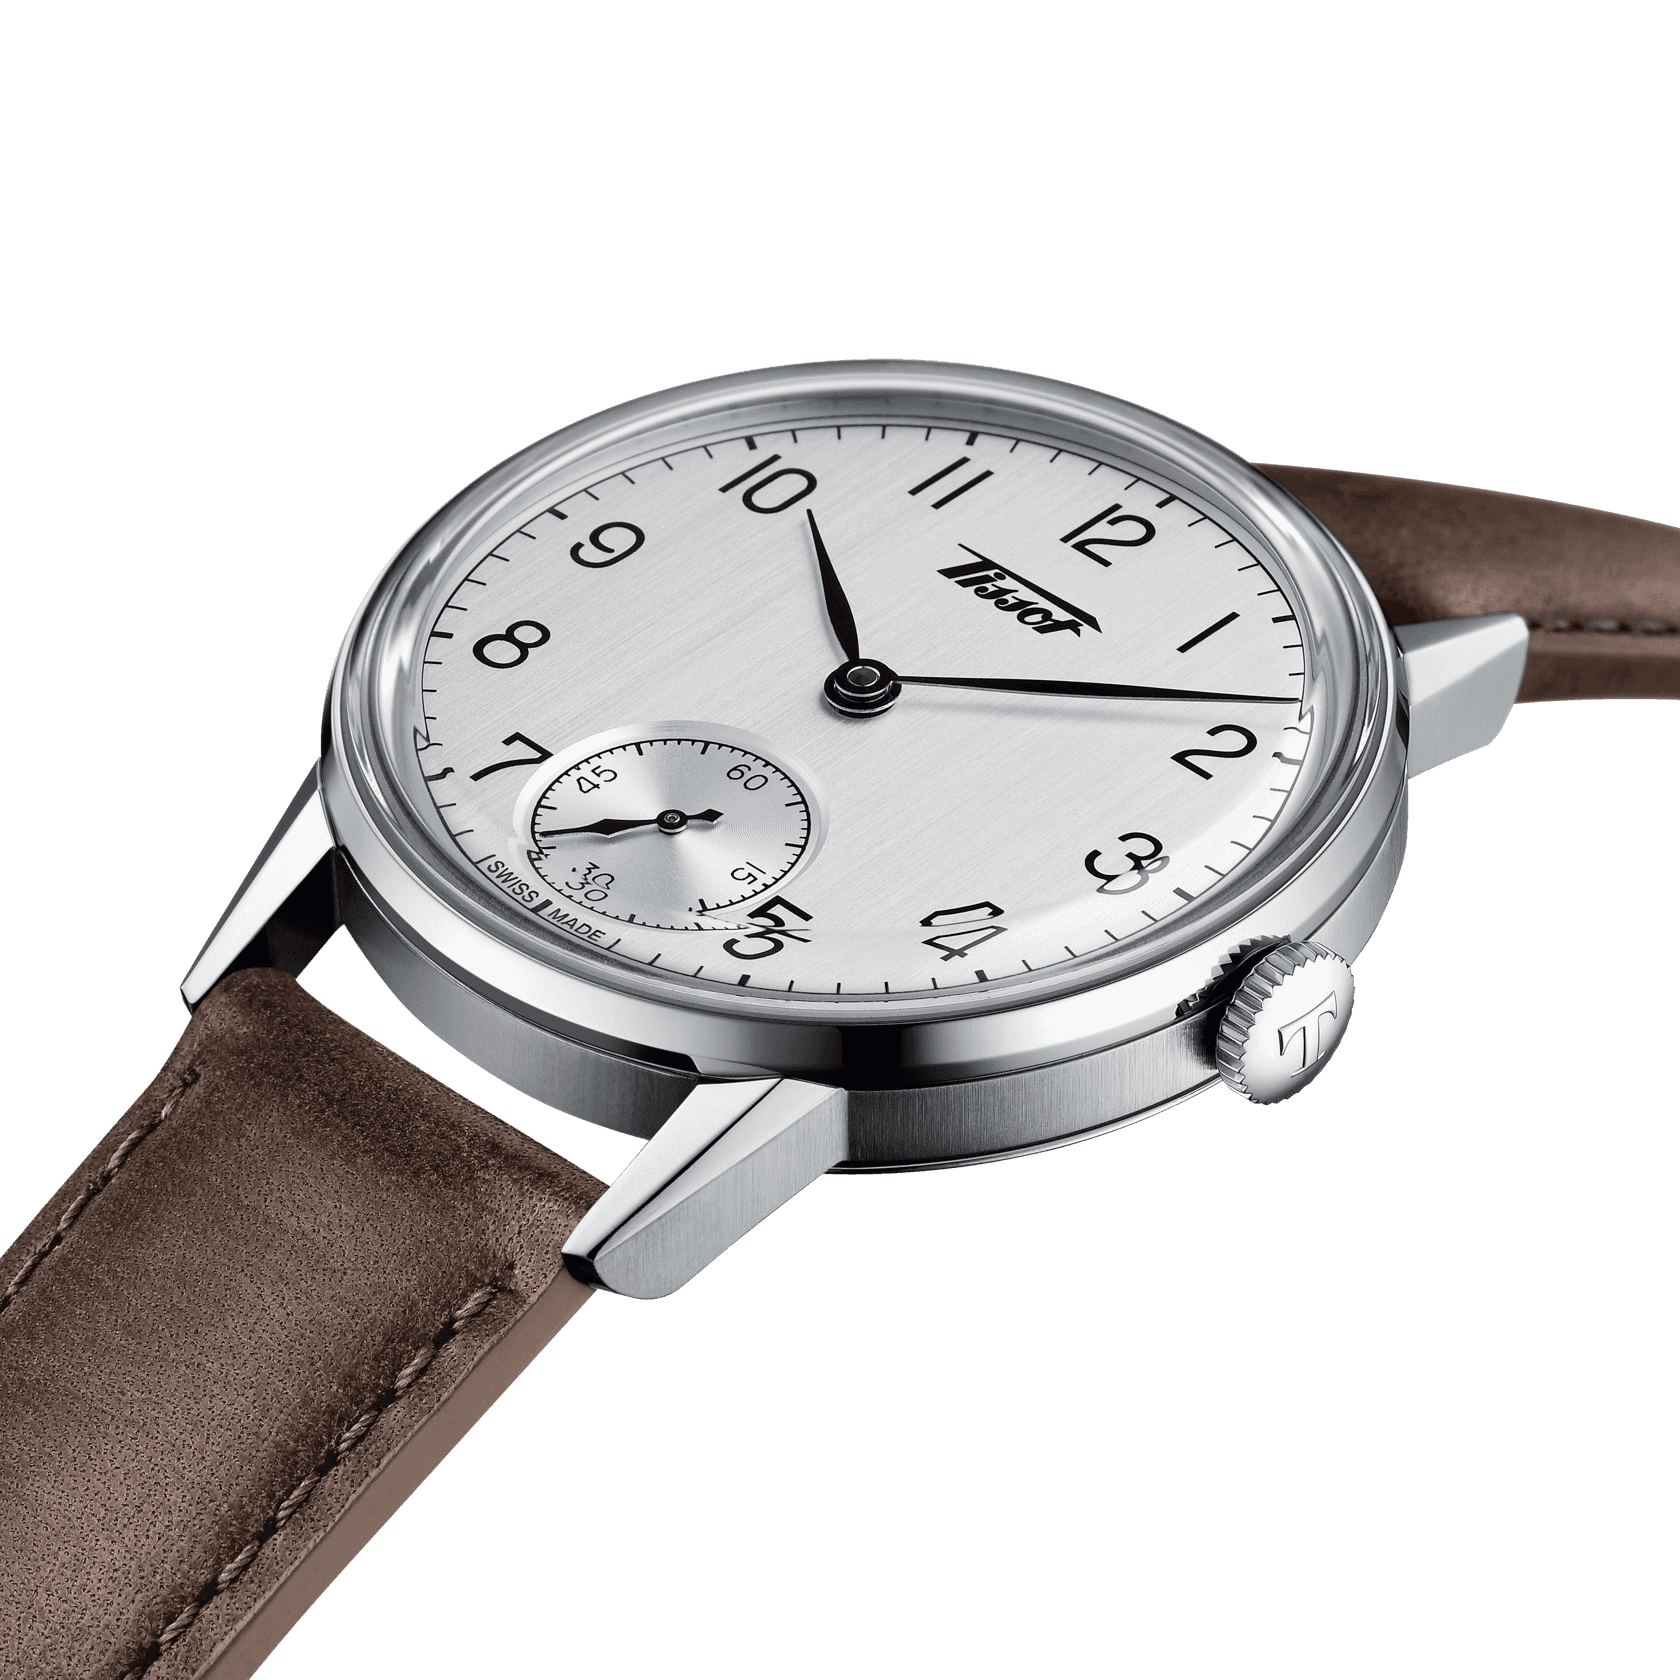 Rolex Replica Watches For Sale